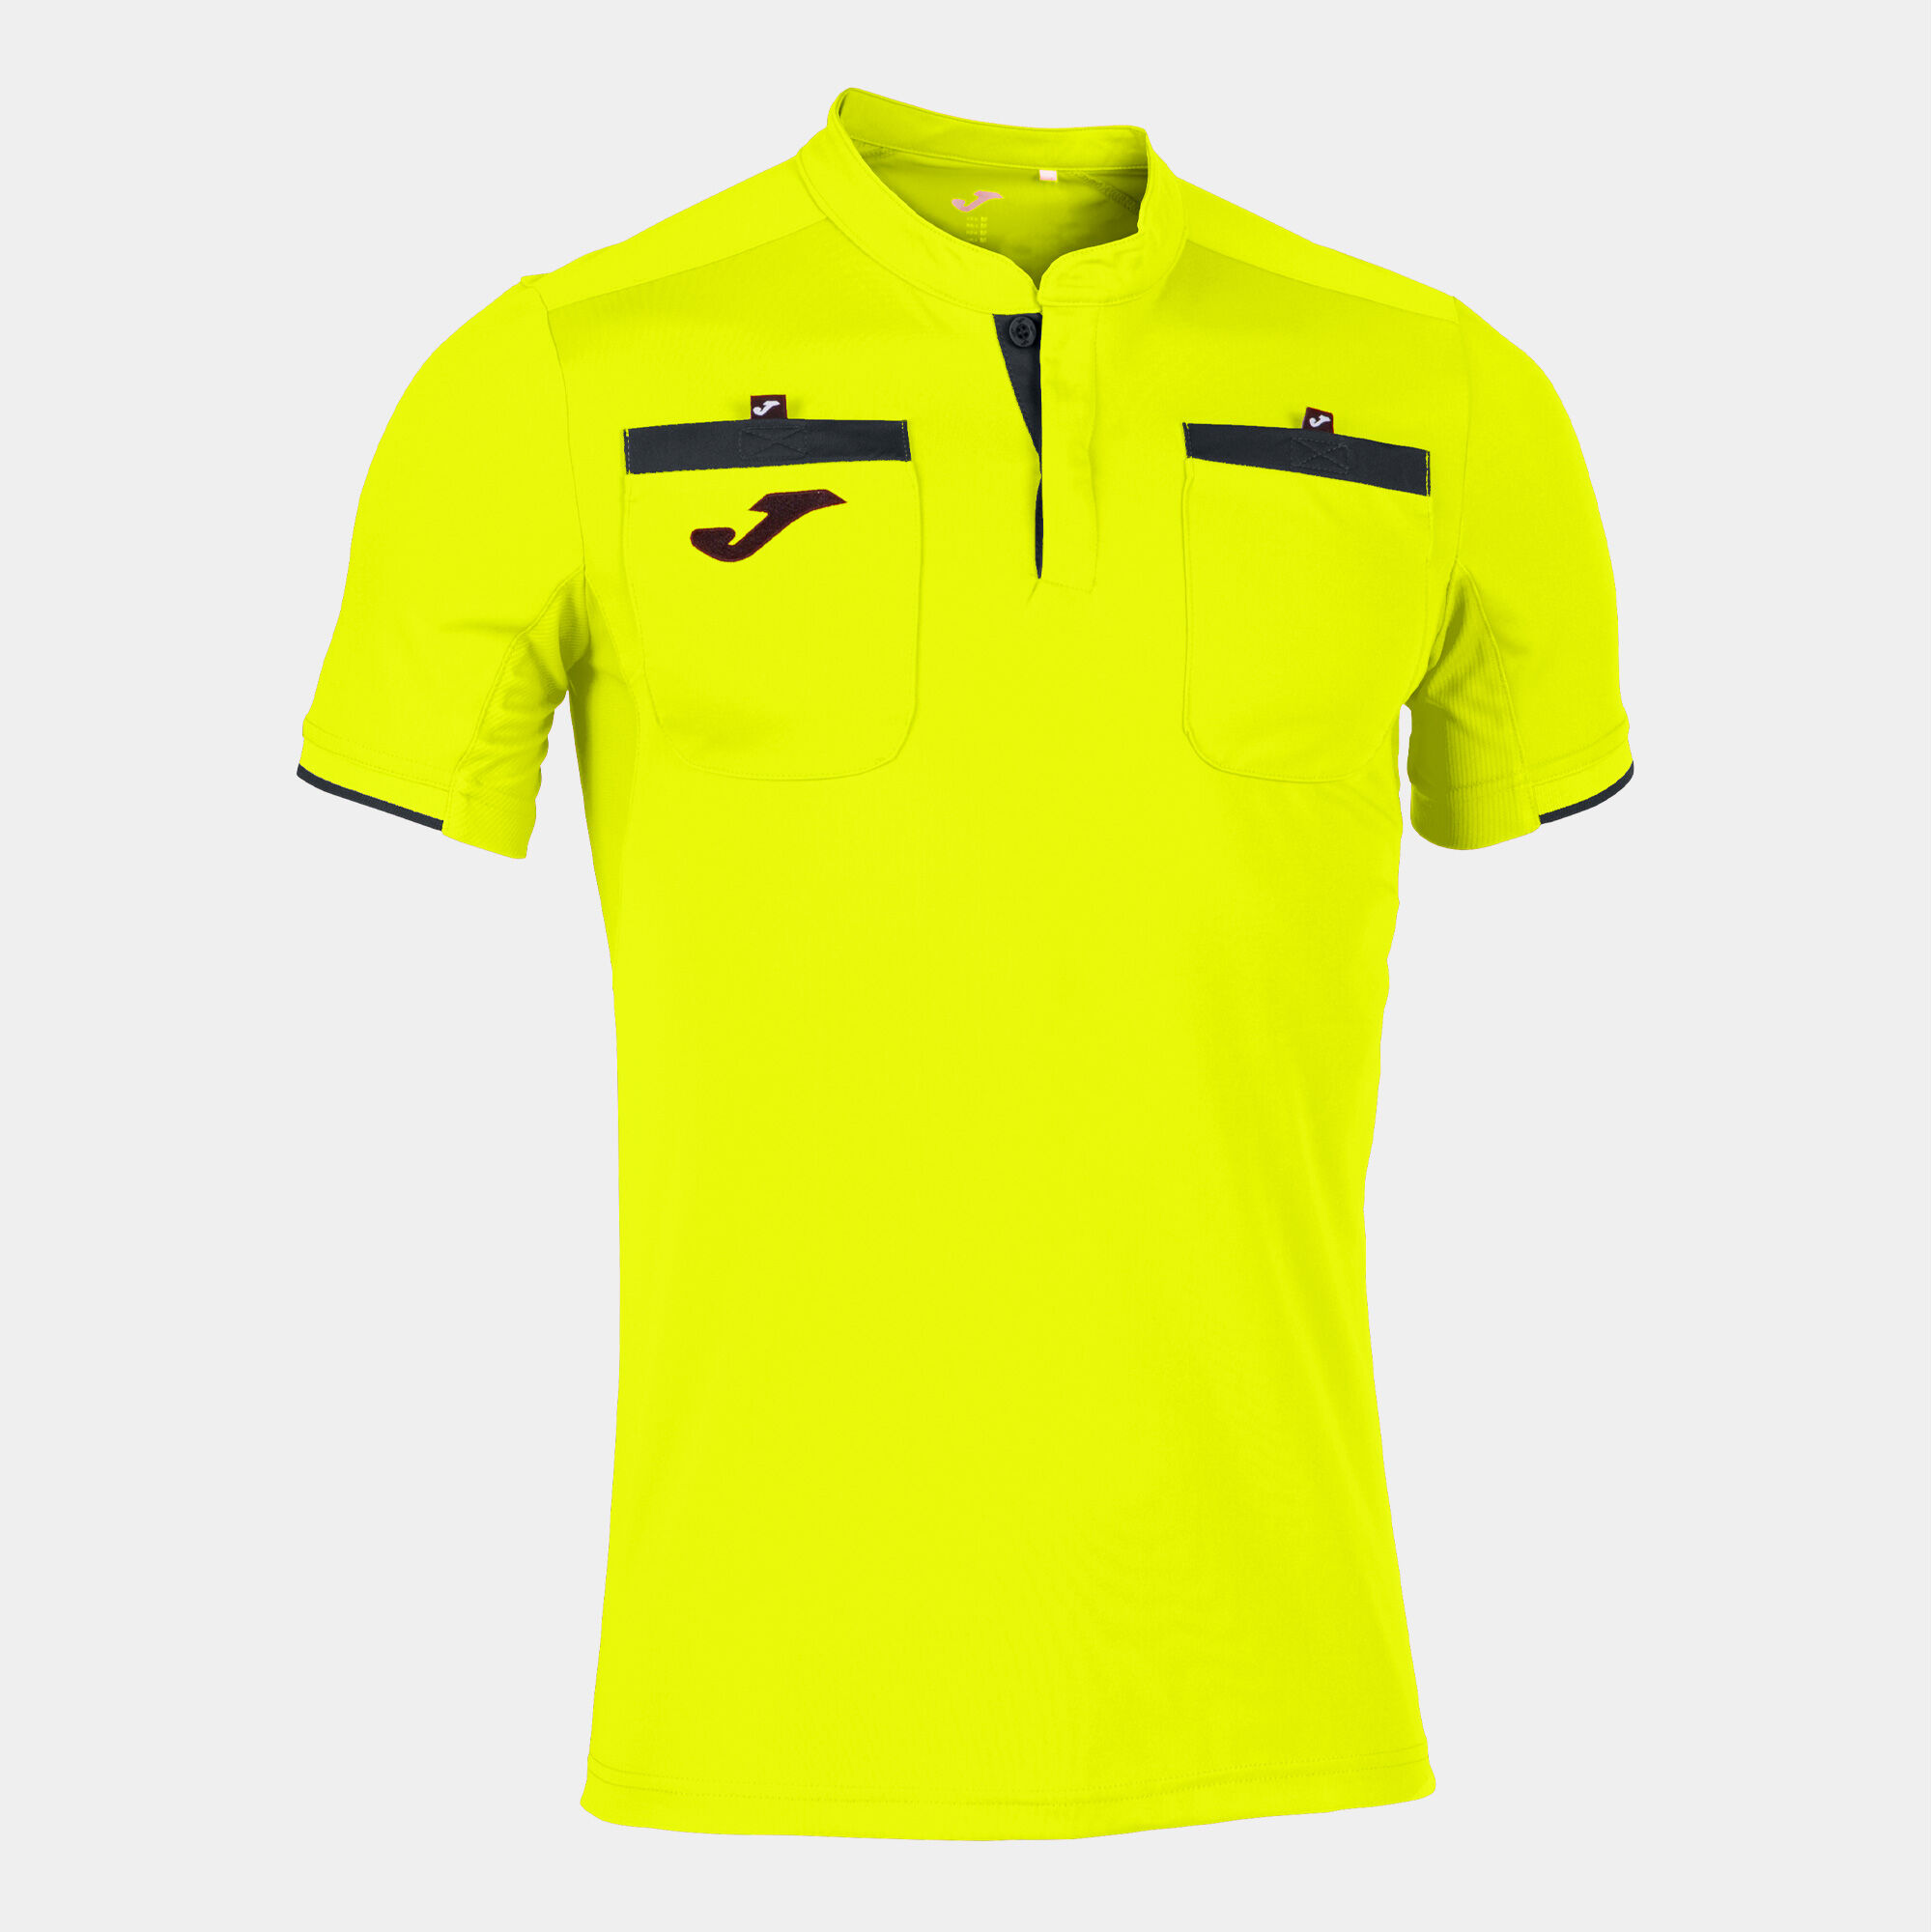 Camiseta manga corta hombre Referee amarillo flúor